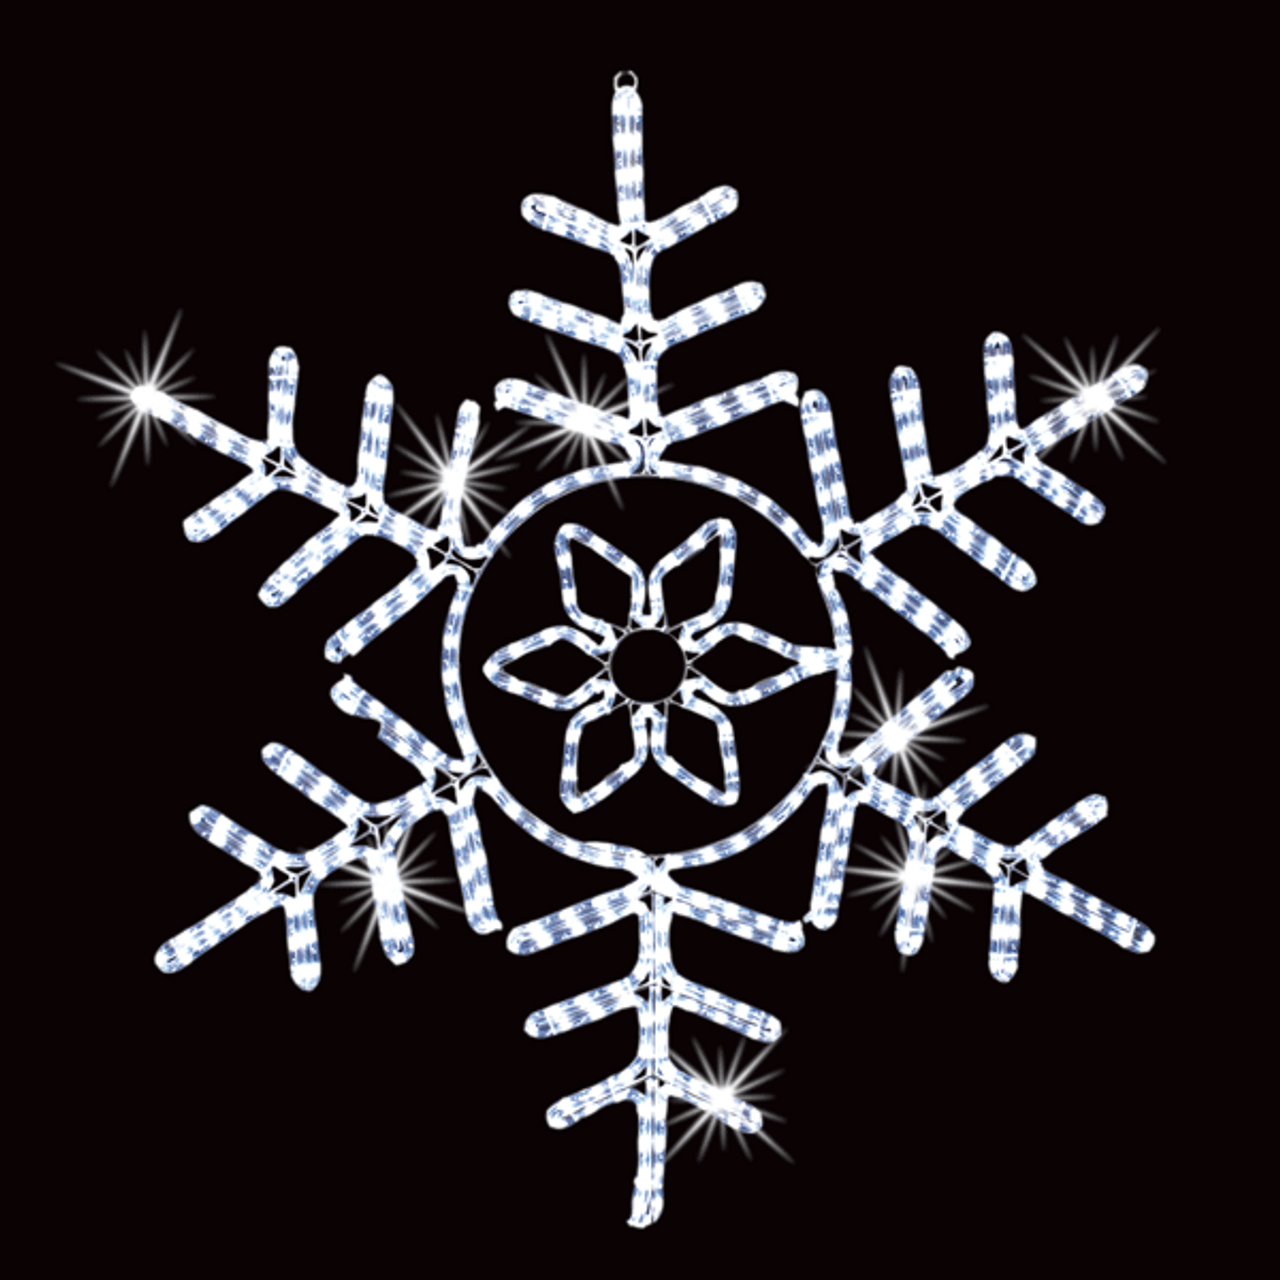 LED Rope Light Snowflake Motif - Twinkling Lighted Silhouette - Cool White - 36 inch - Birddog Lighting